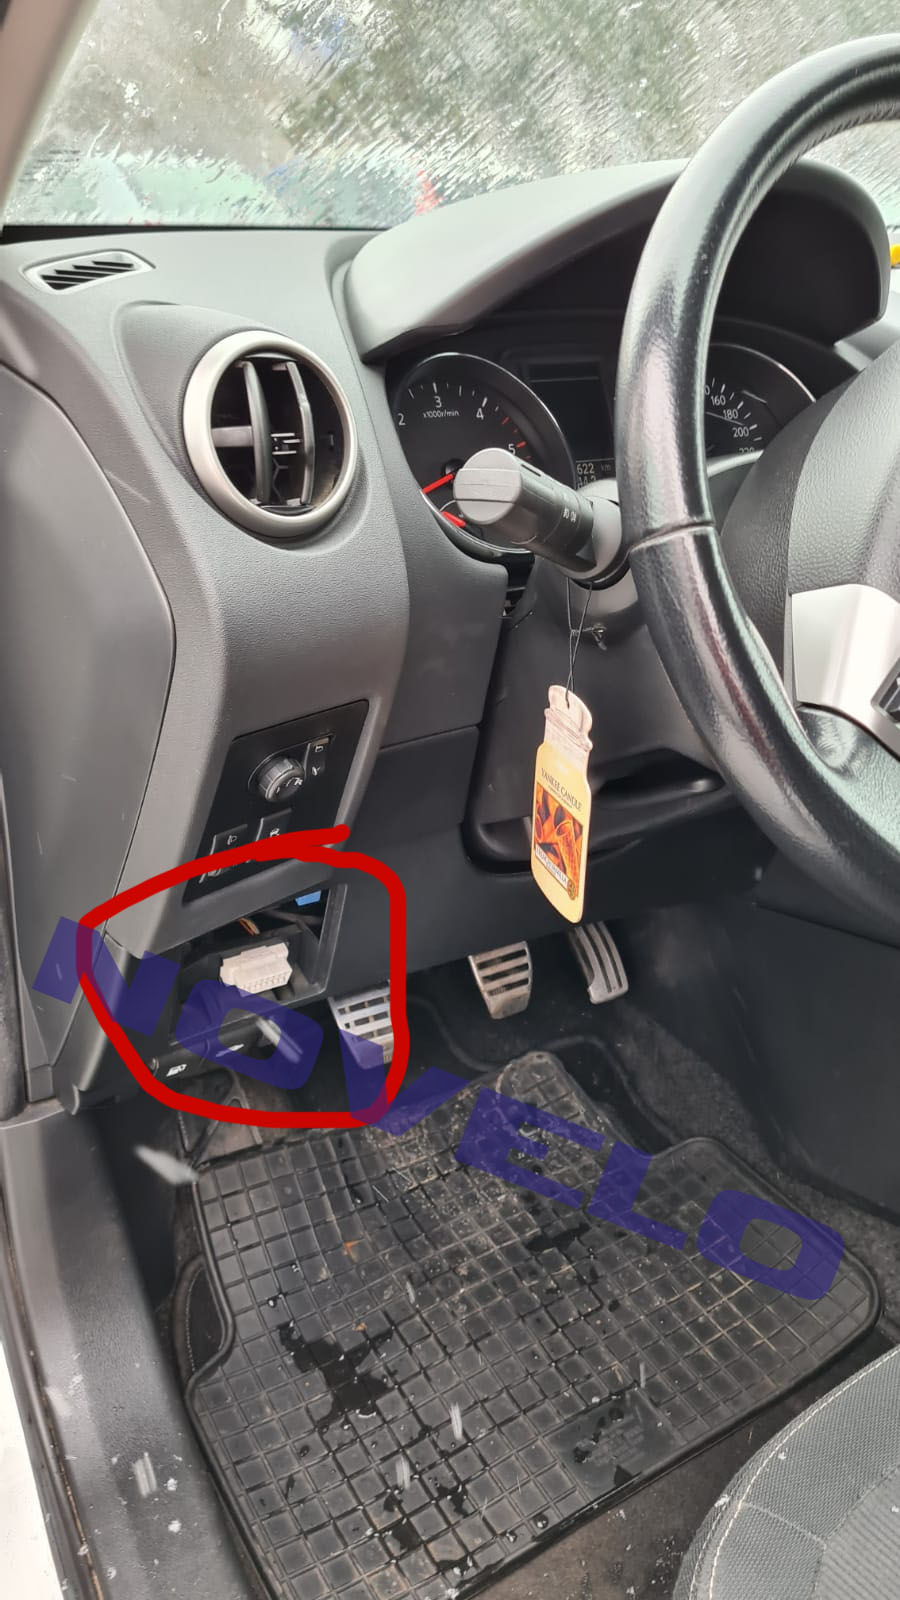 OBD zásuvku u Nissan Qashqai 2010 najdeme vlevo pod volantem.